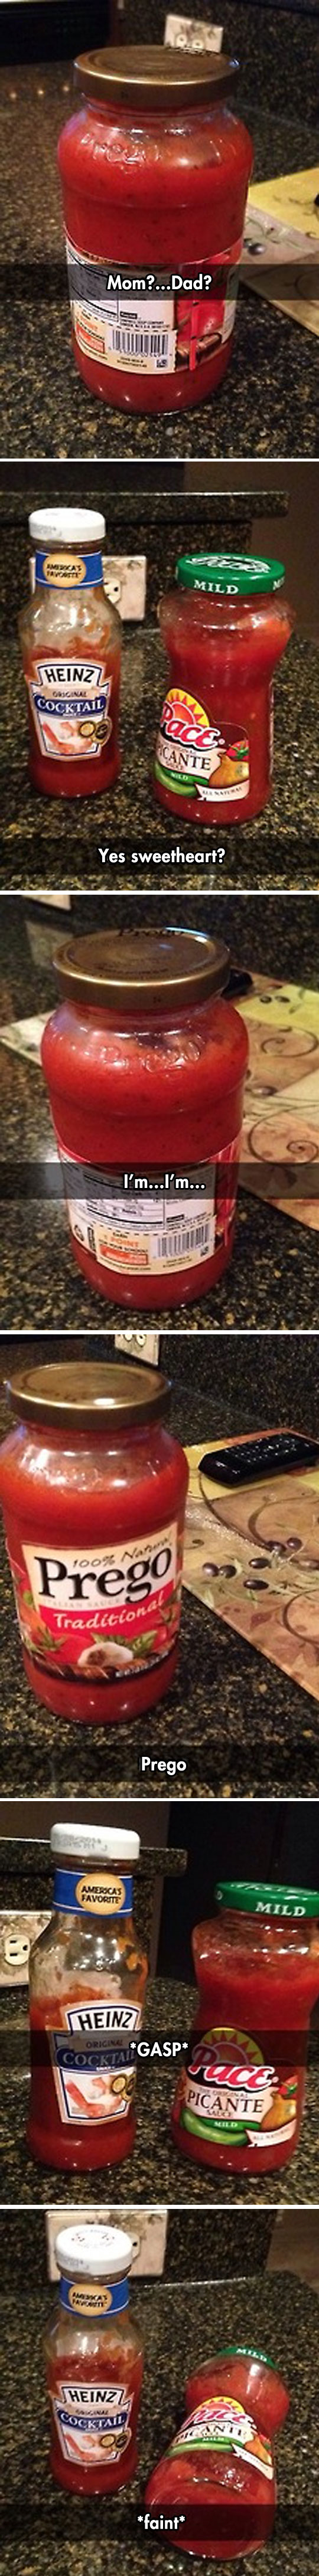 Tomato sauce problems…